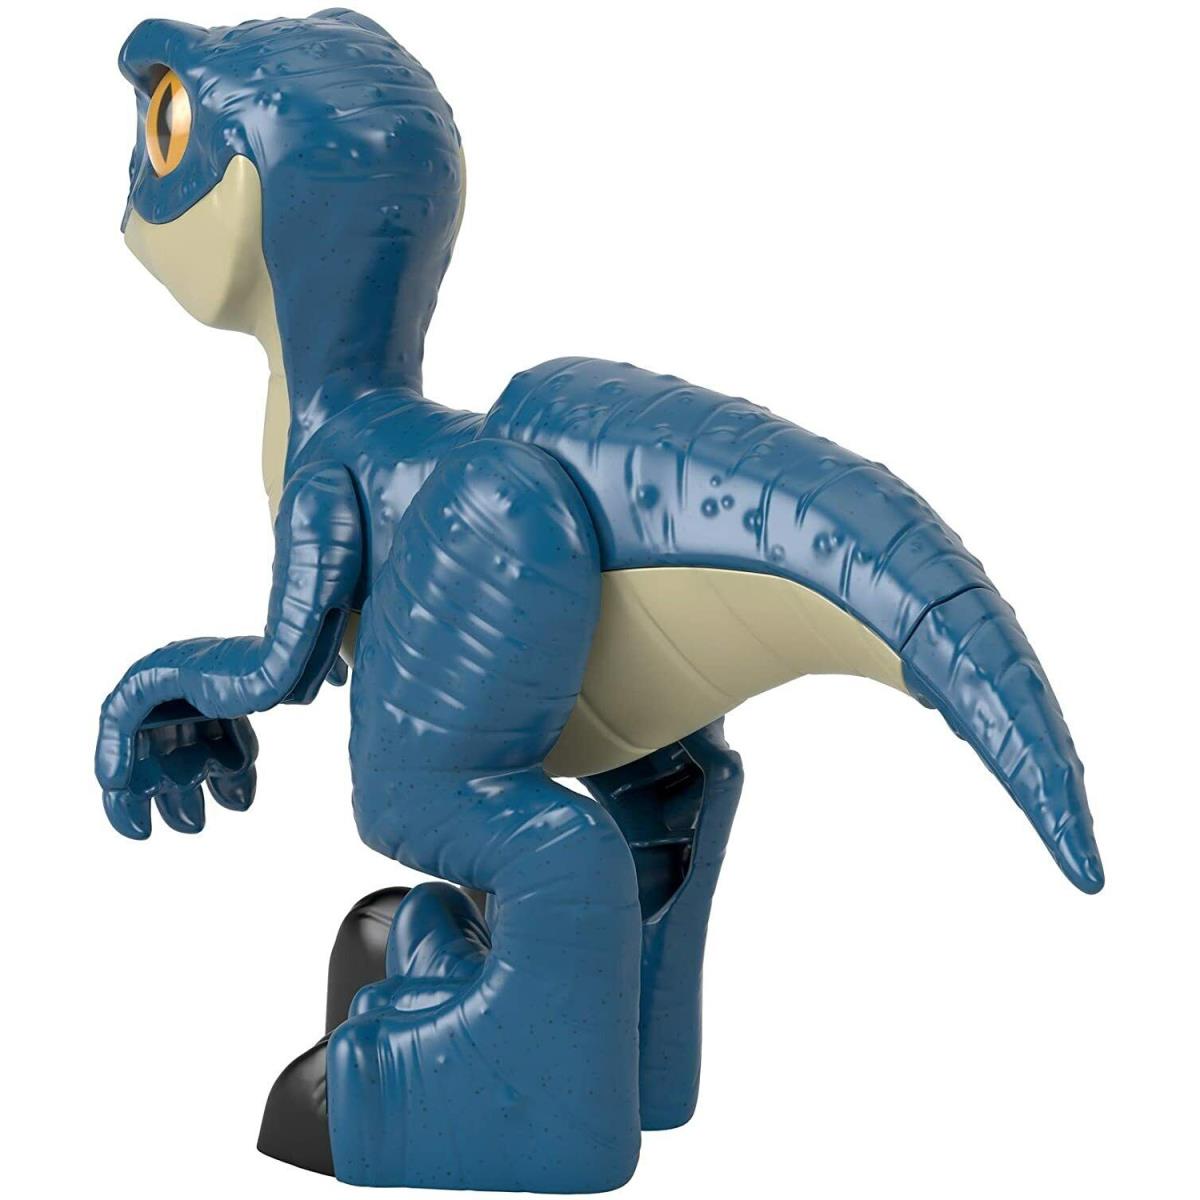 2020 Mattel Imaginext Jurassic World Raptor XL Dinosaur Toy Figure